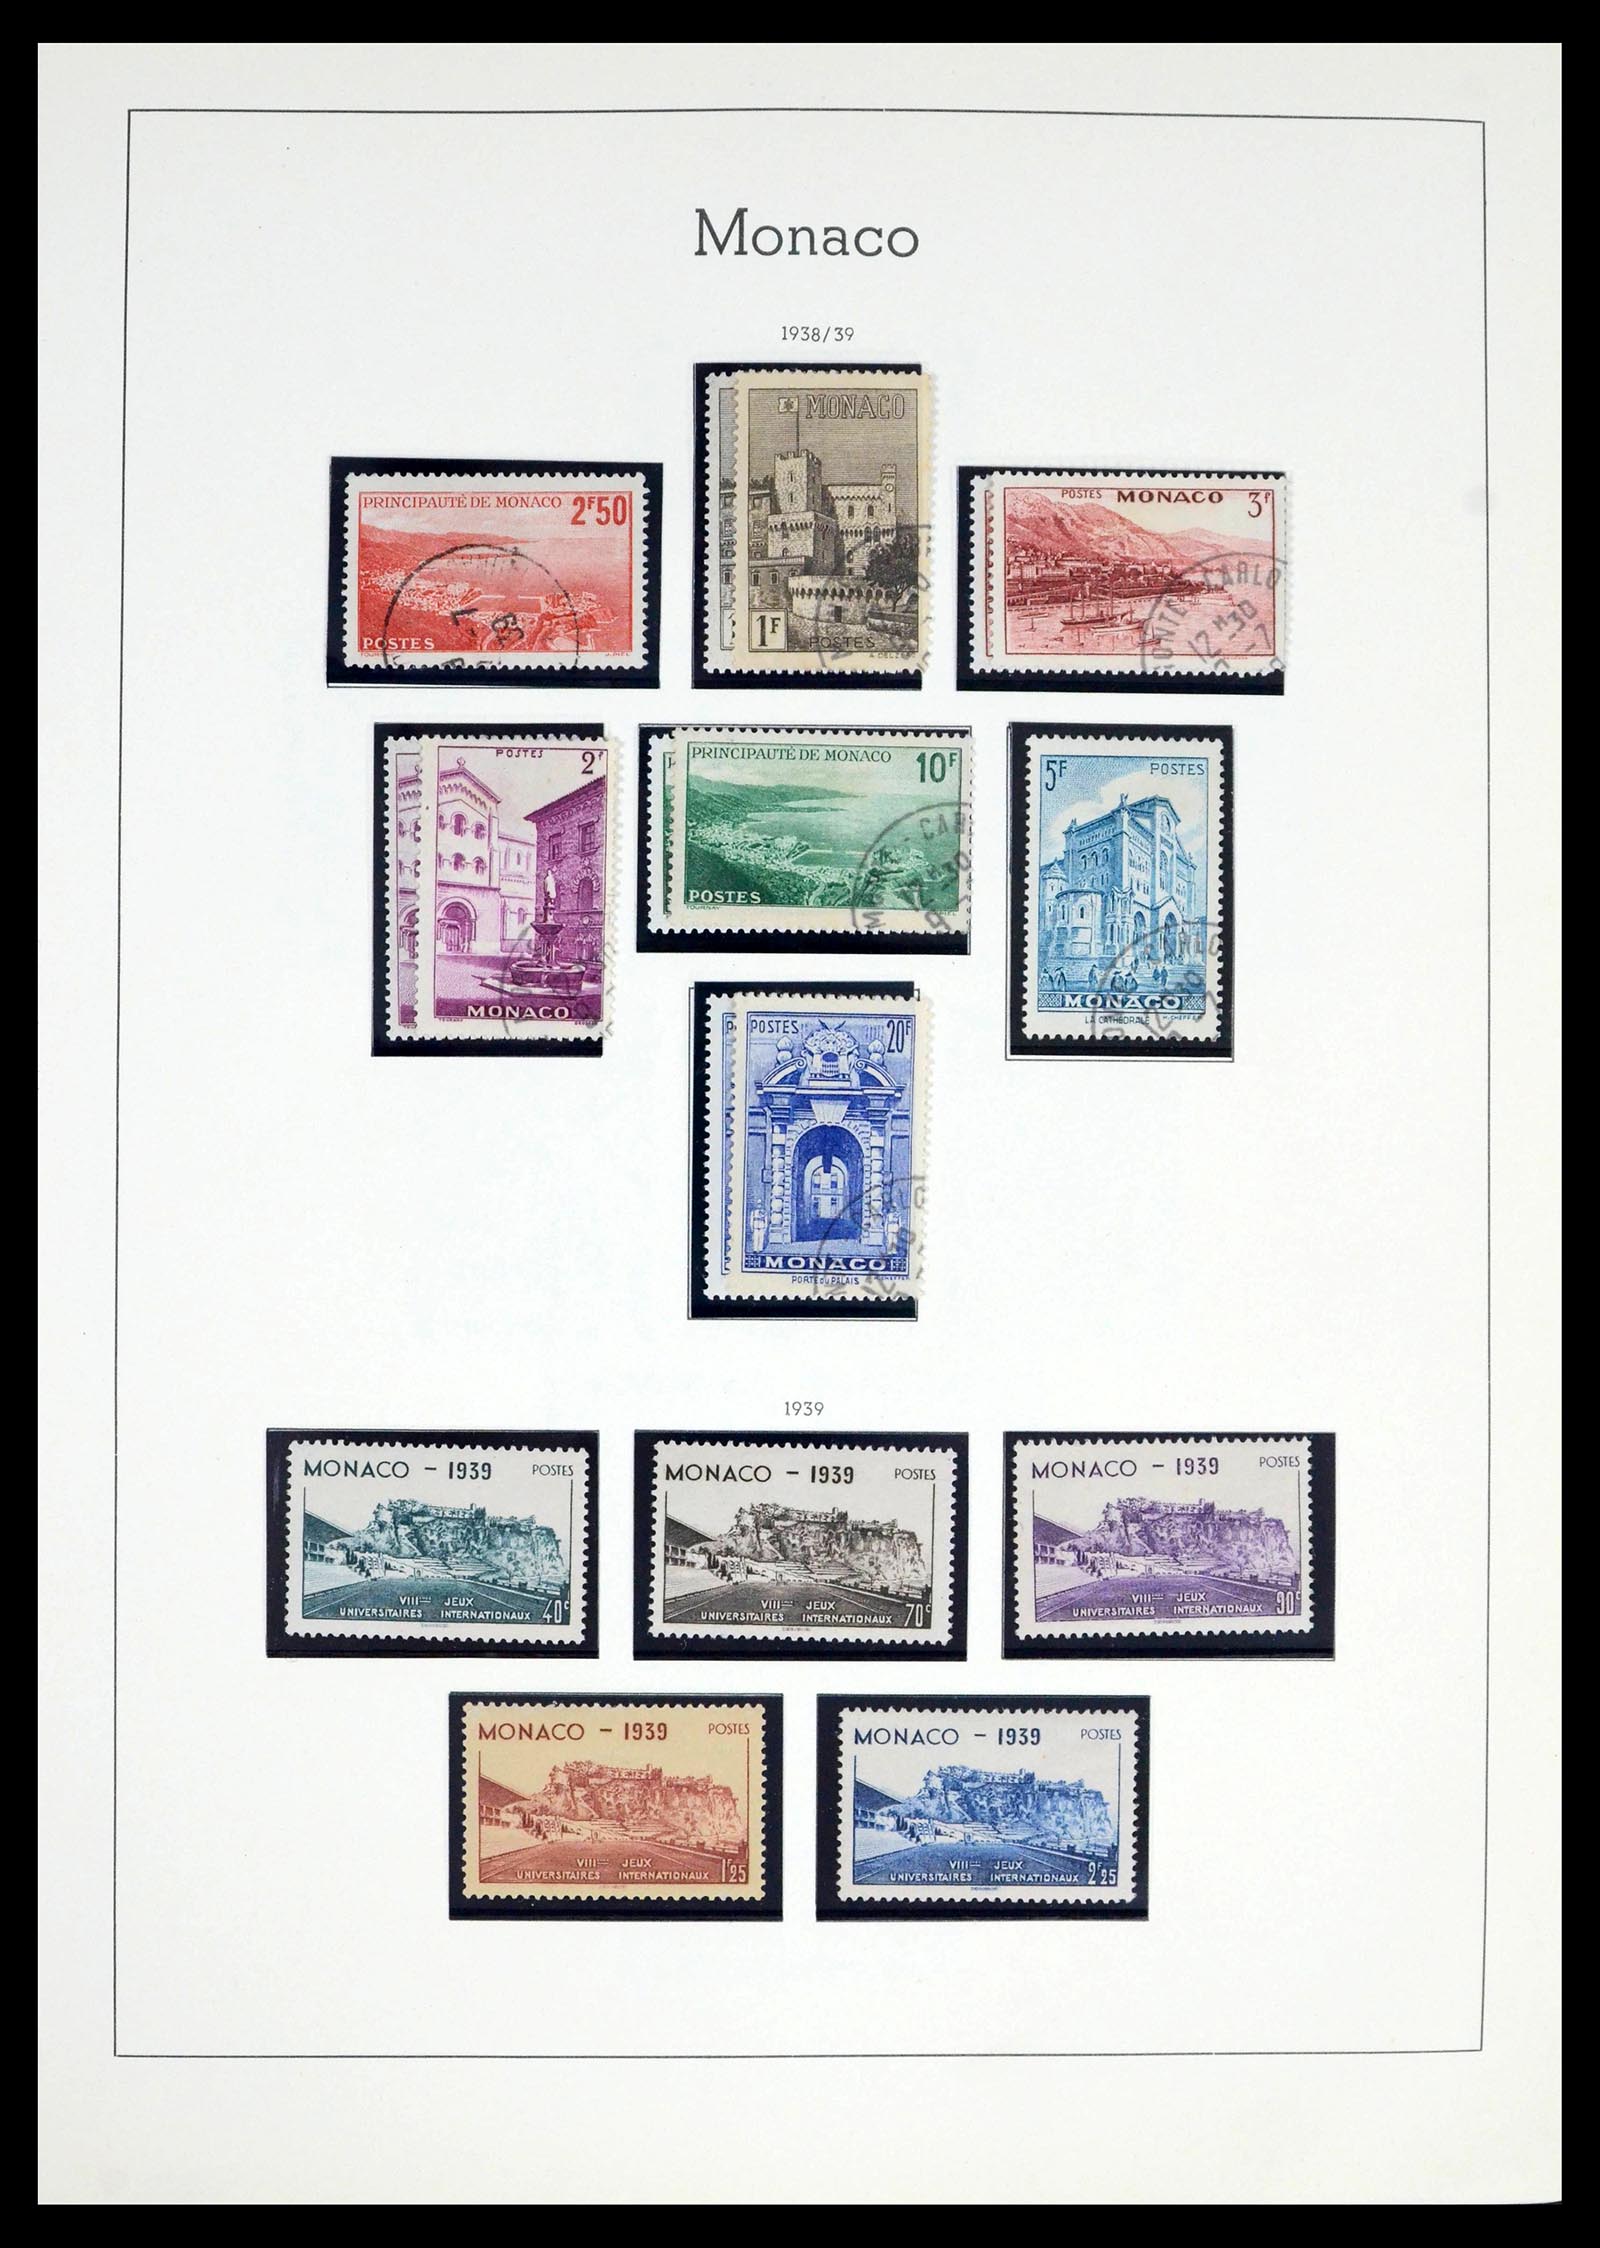 39392 0014 - Stamp collection 39392 Monaco 1885-1999.